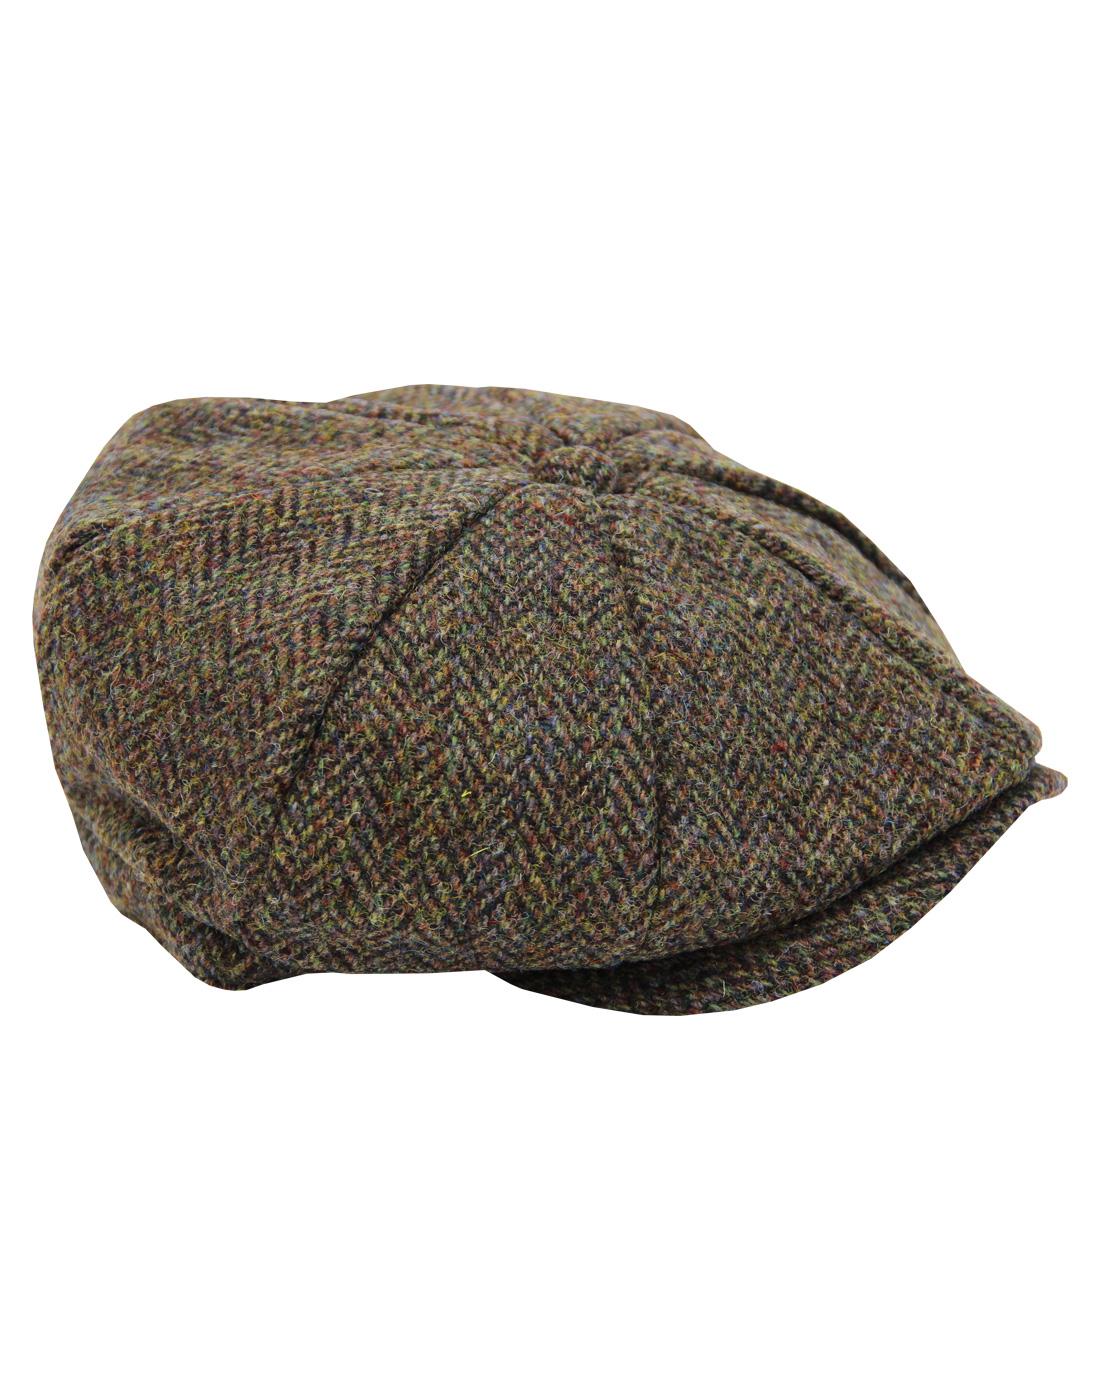 York GIBSON LONDON Mens Retro Mod Tweed Gatsby Hat